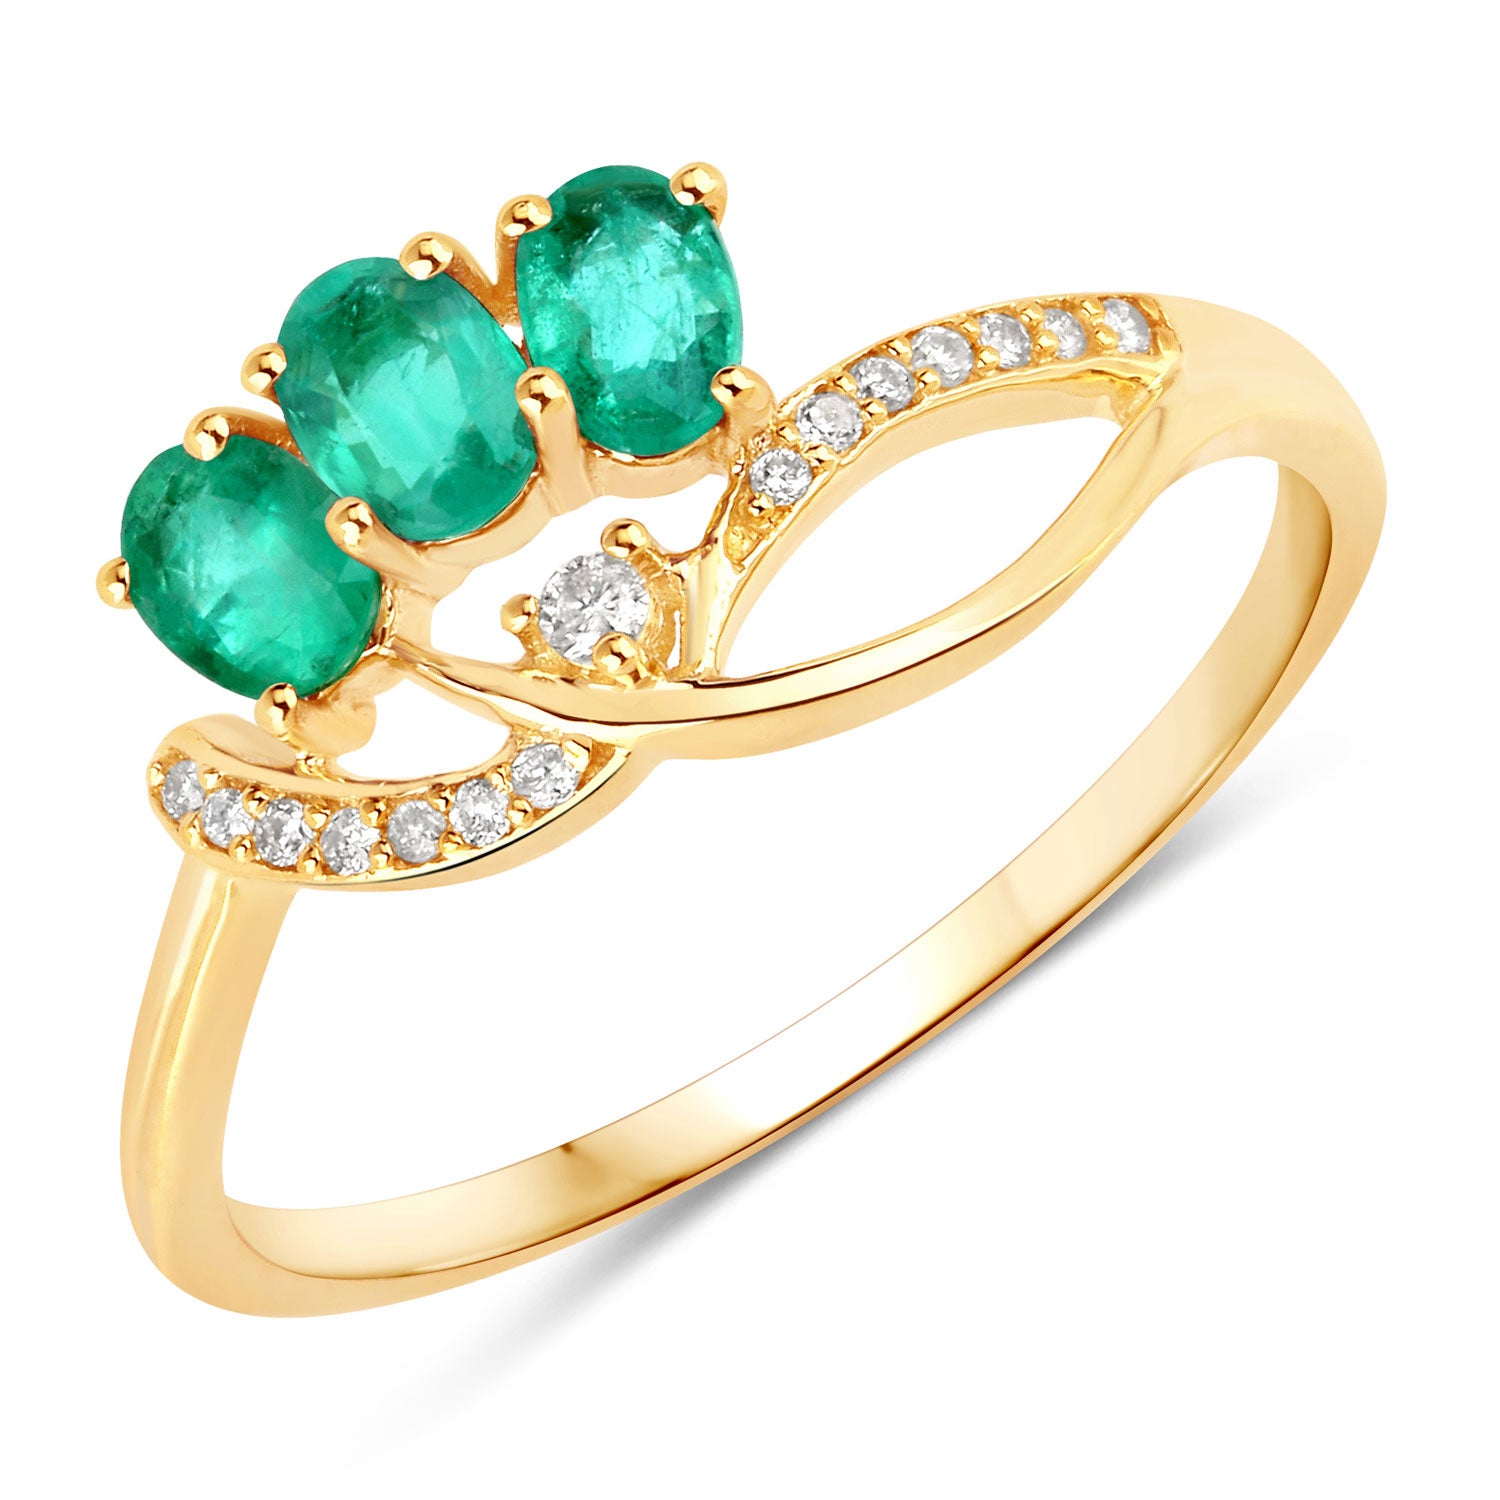 0.50 Carat Genuine Zambian Emerald and White Diamond 14K Yellow Gold Ring